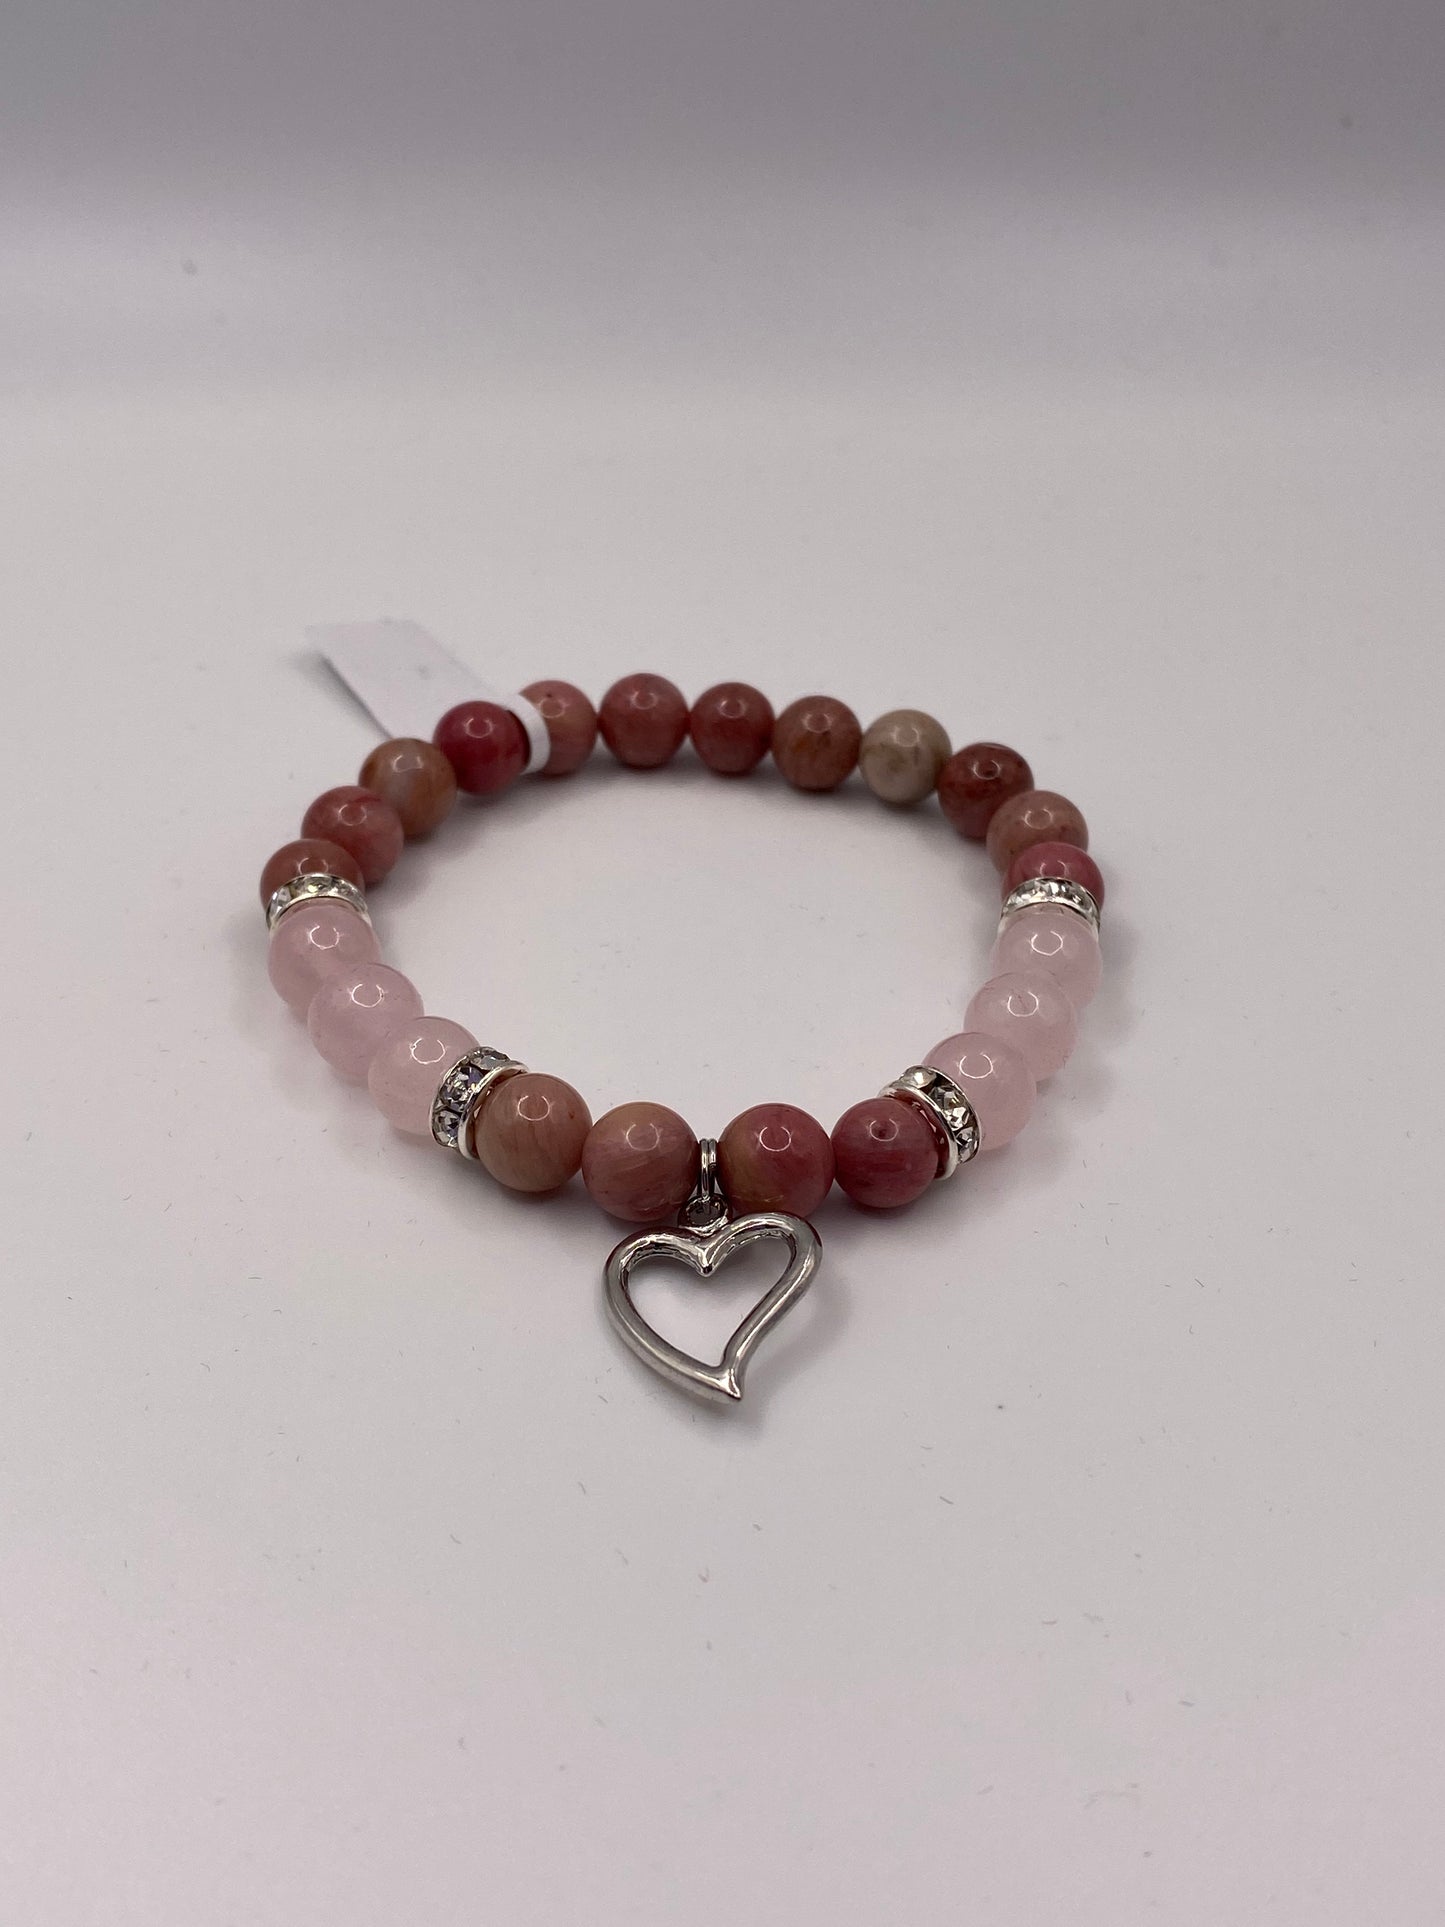 Heart Bracelet with Rose Quartz and Rhodonite